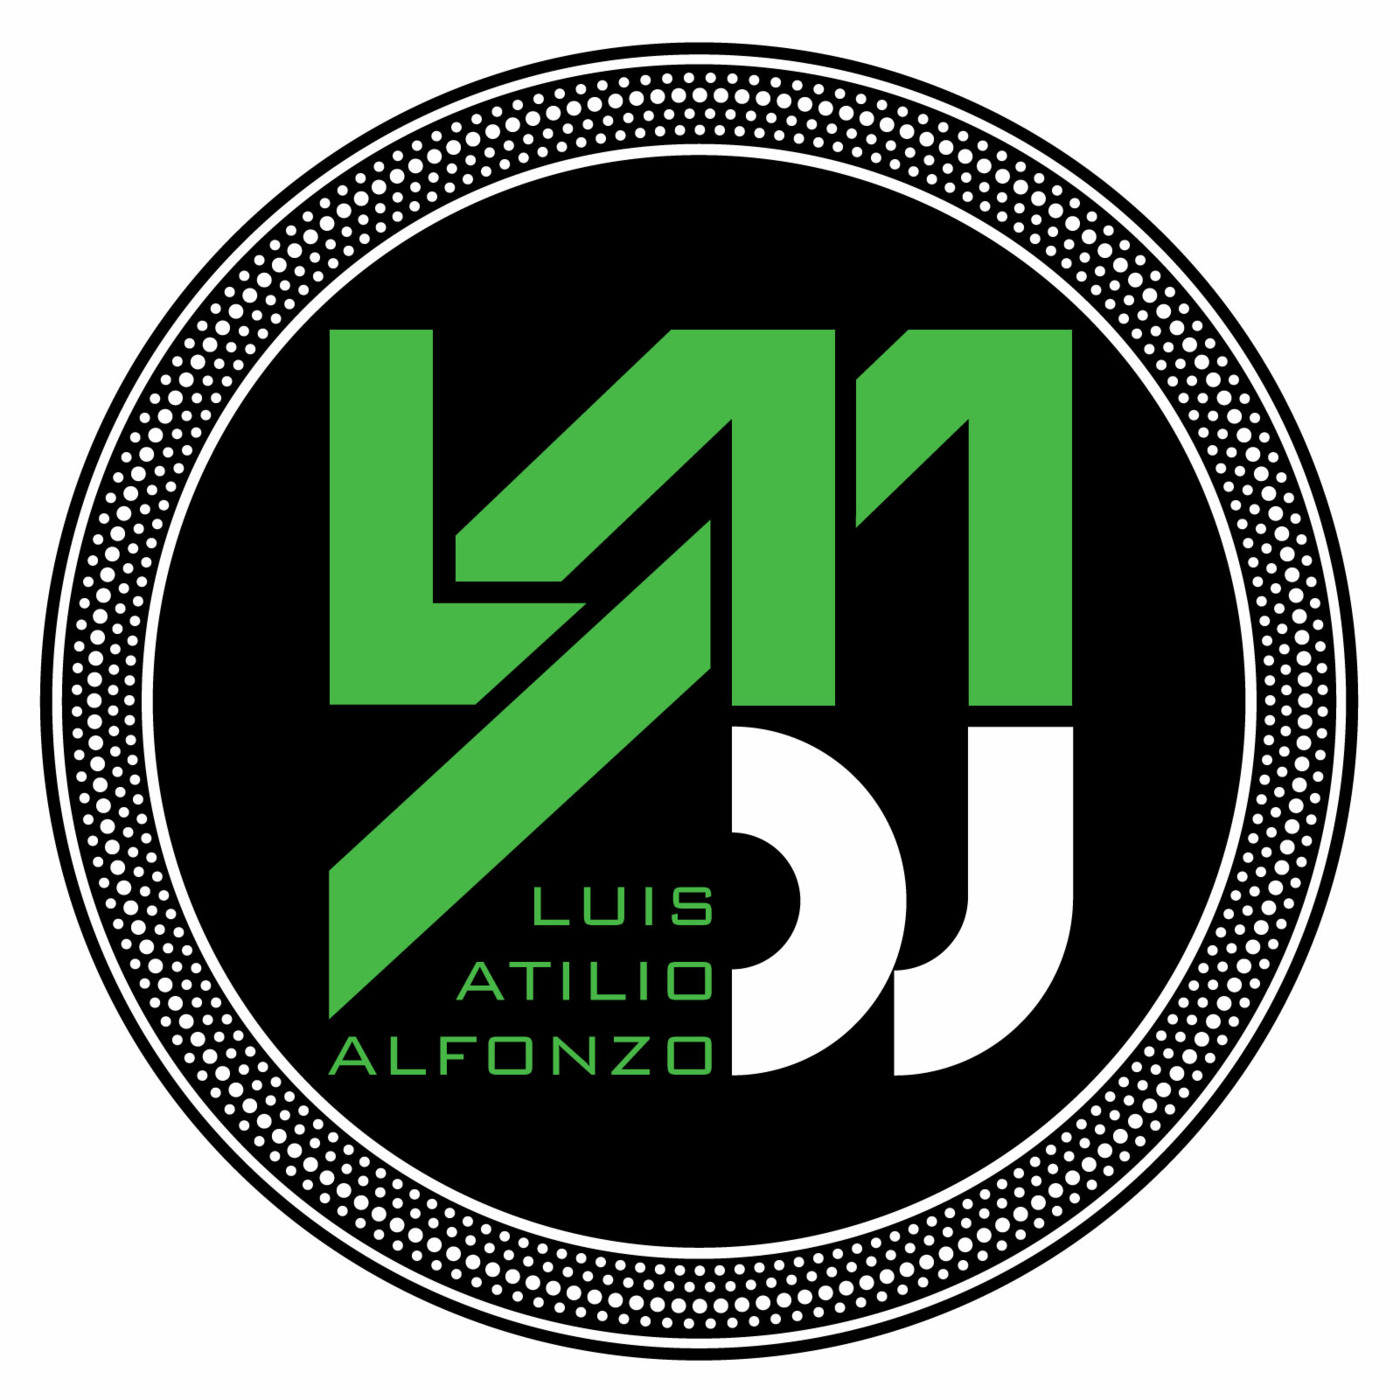 DJ Luis Atilio Alfonzo's Podcast